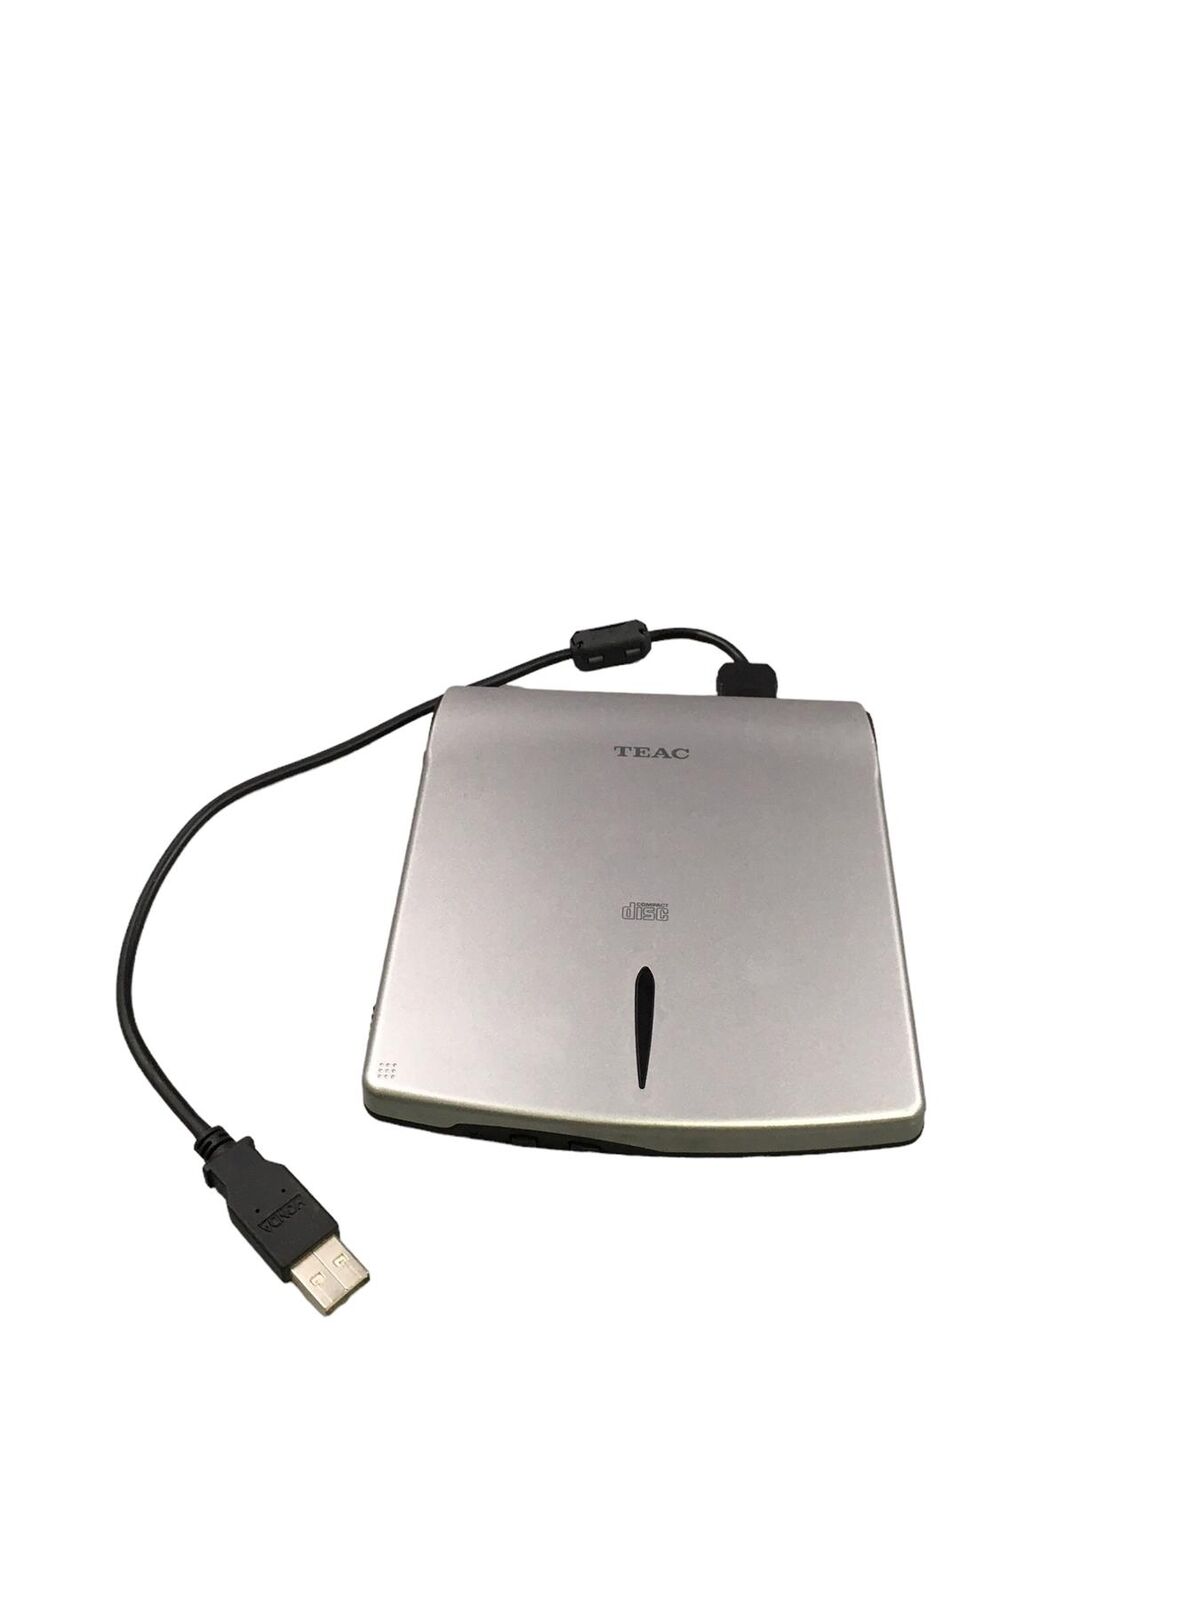 TEAC CD-210PU External CD Drive with USB connection